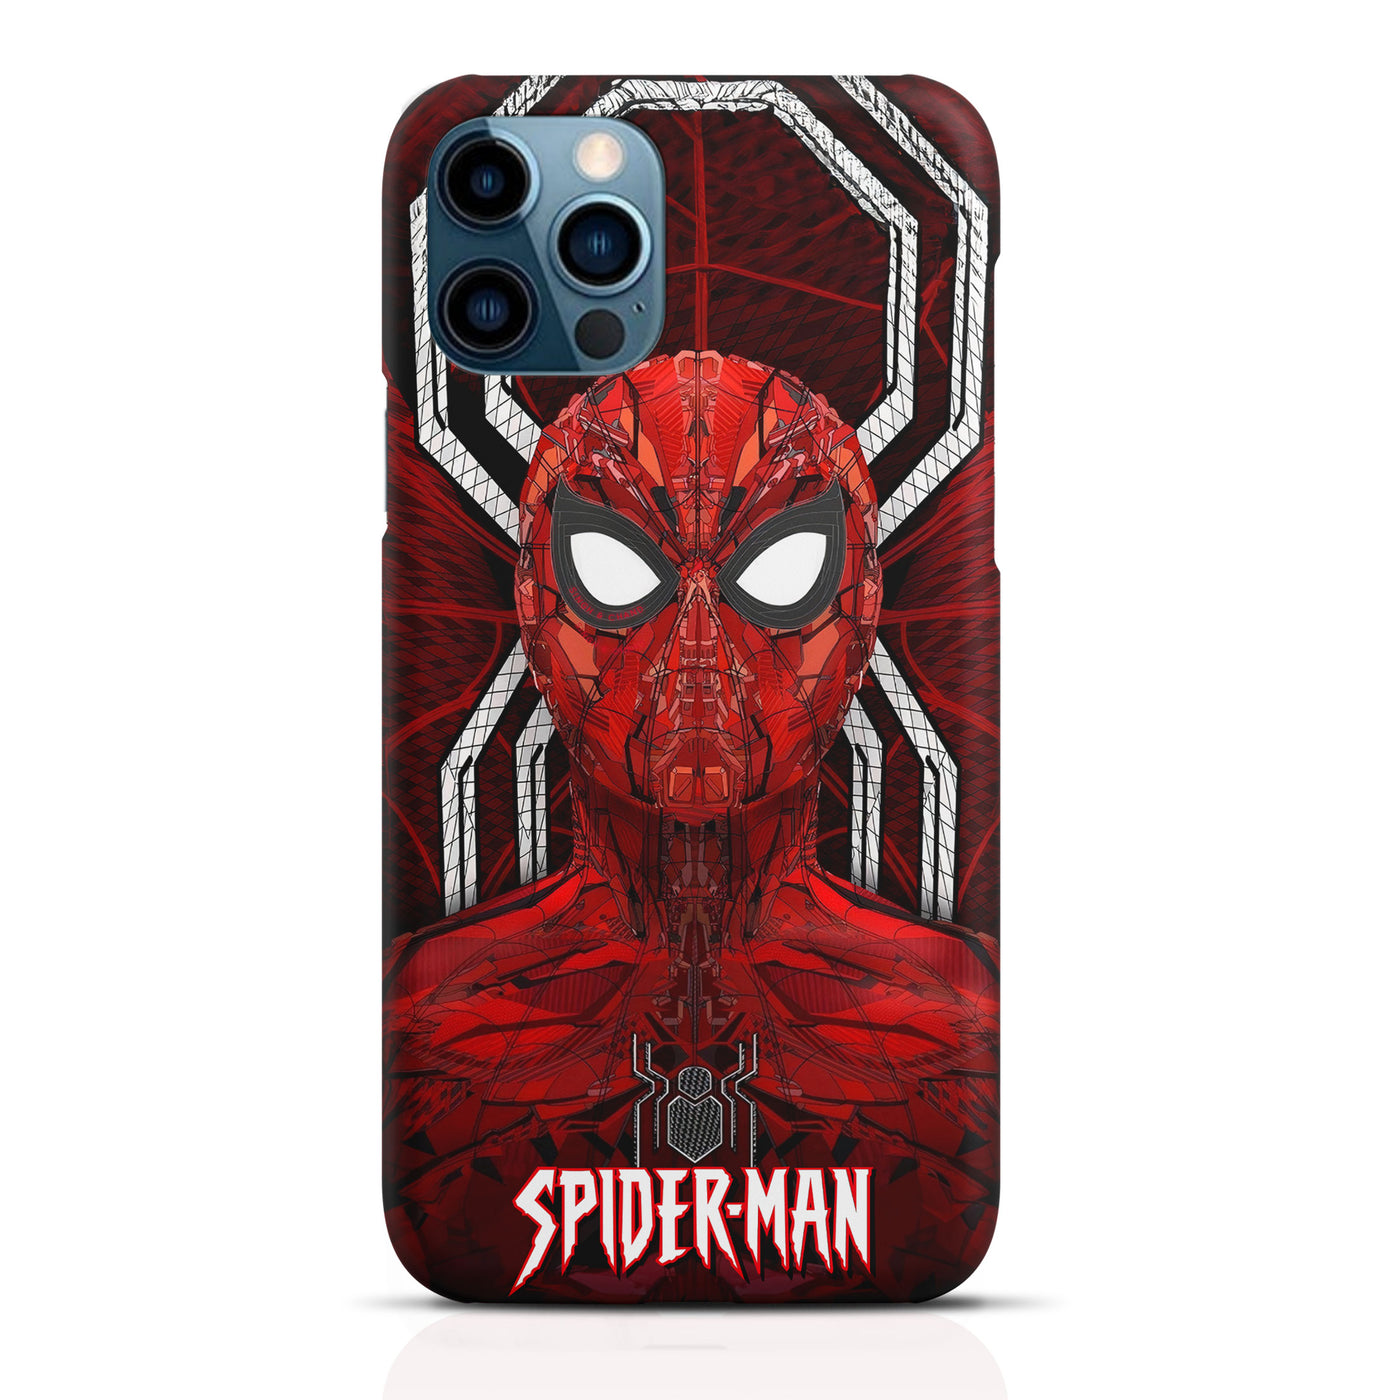 Spiderman Matt Phone Case